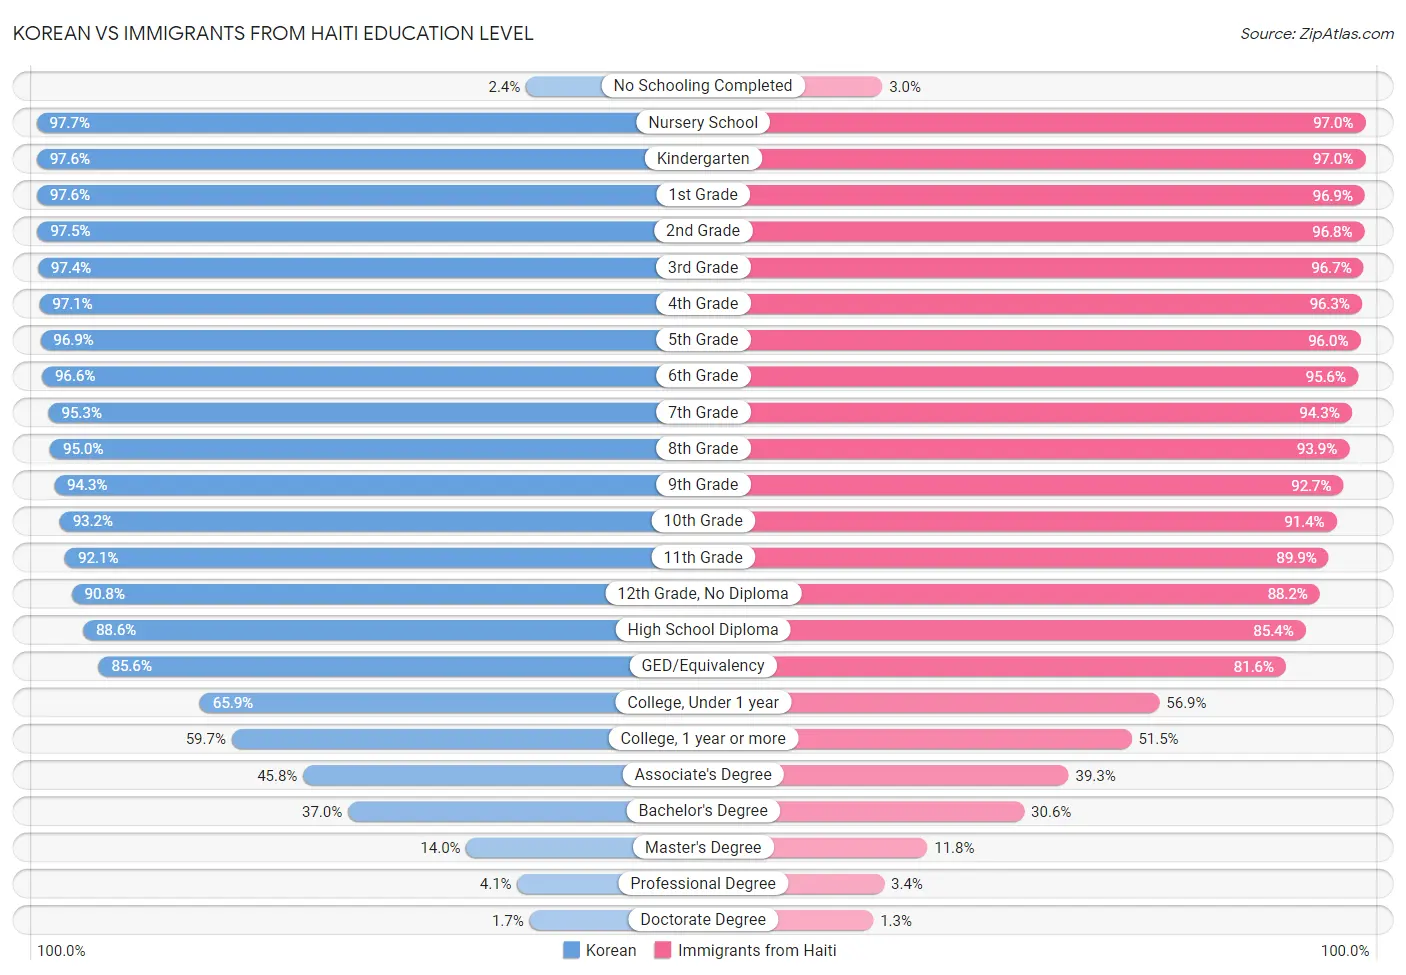 Korean vs Immigrants from Haiti Education Level